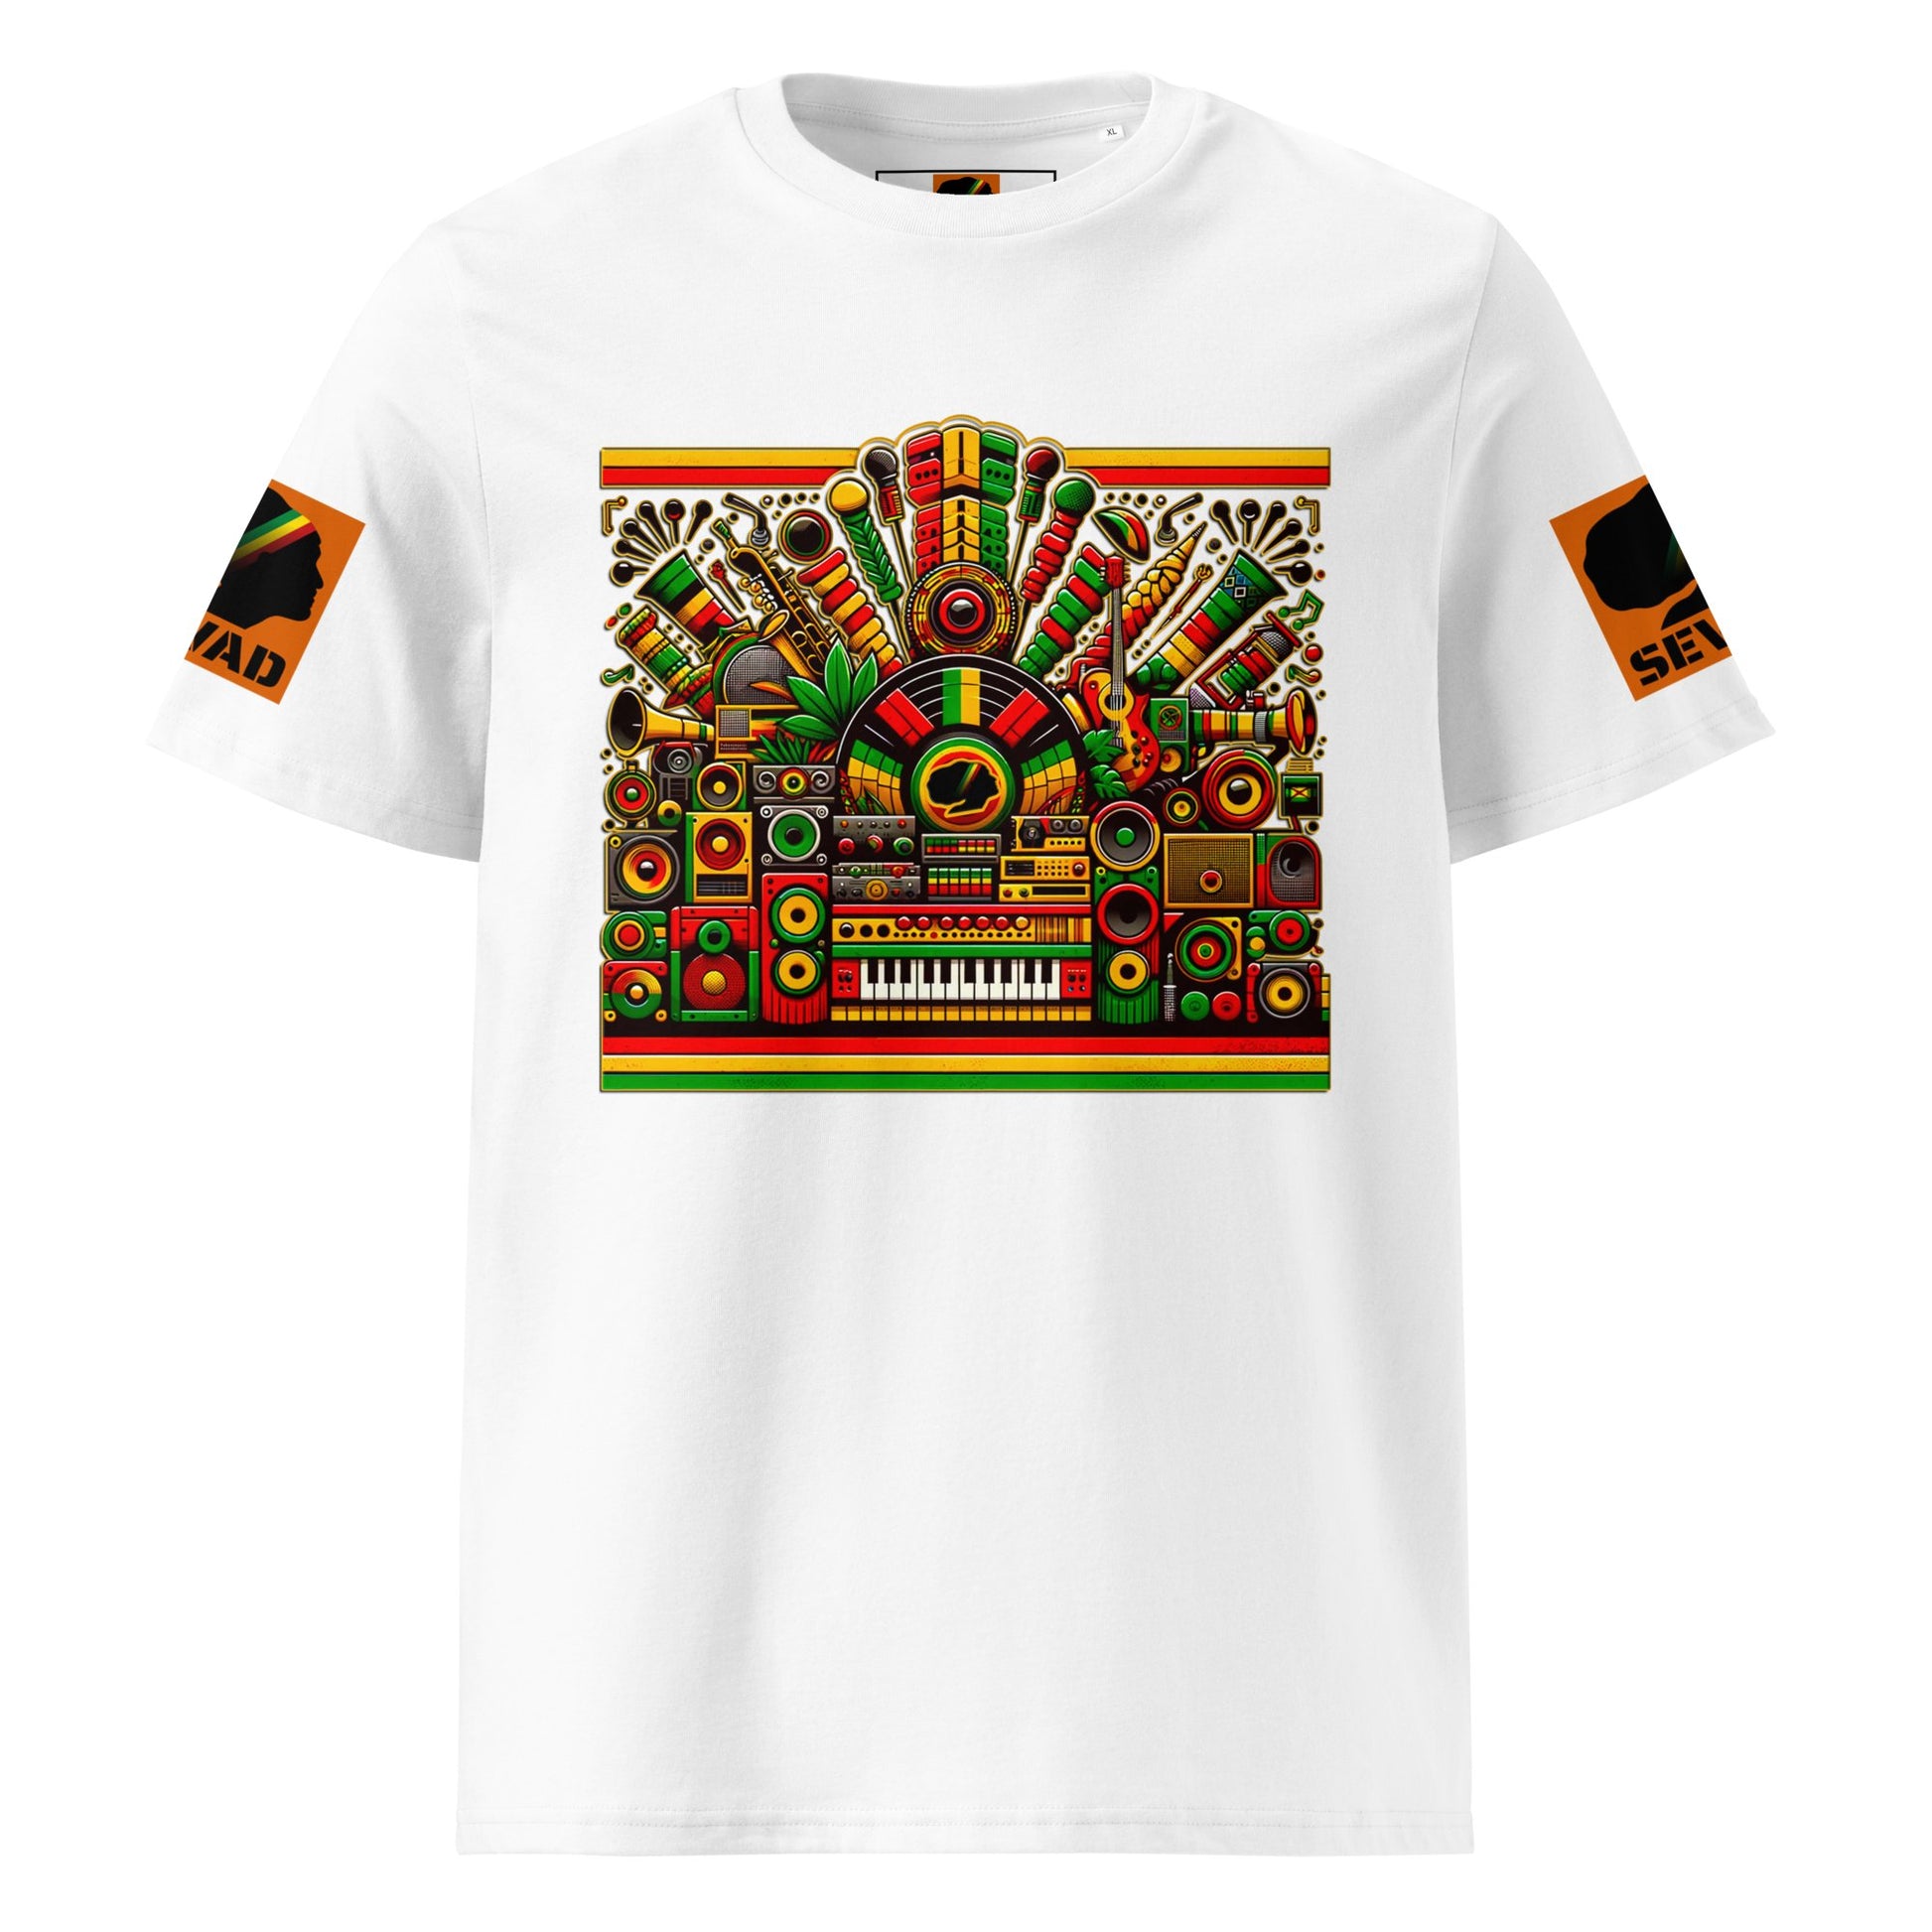 Soul of Reggae: Unisex organic cotton t-shirt - SEVAD MUSIC HOUSE - T-Shirt - SEVAD MUSIC HOUSE - 5991809_11864 - White - S - Soul of Reggae: Unisex organic cotton t-shirt